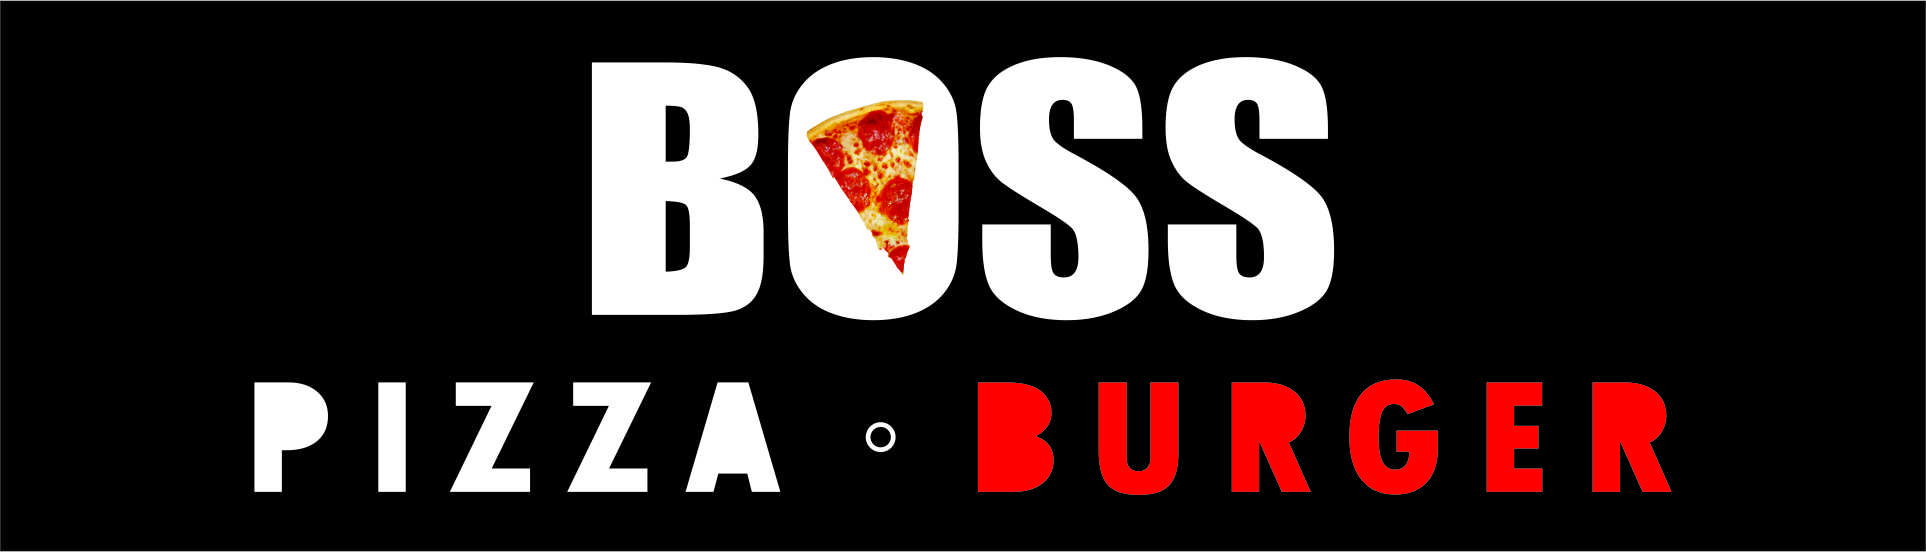 Boss Pizza•Burger